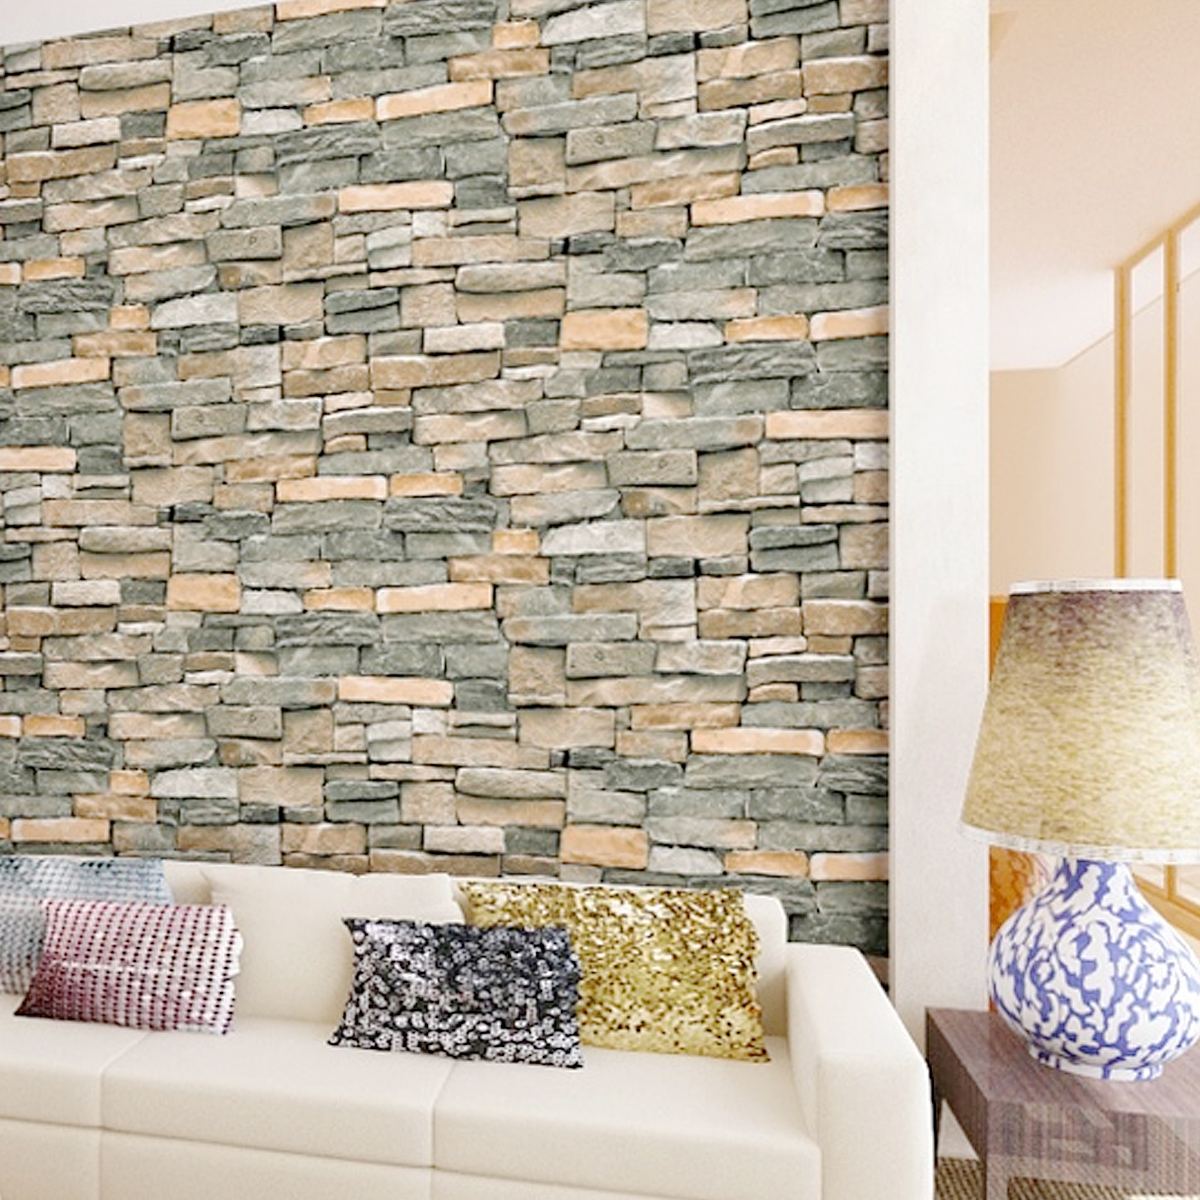 3D-Wall-Paper-Brick-Stone-Pattern-Sticker-Rolls-Self-adhesive-Backdrop-DIY-Room-Decor-1373594-3